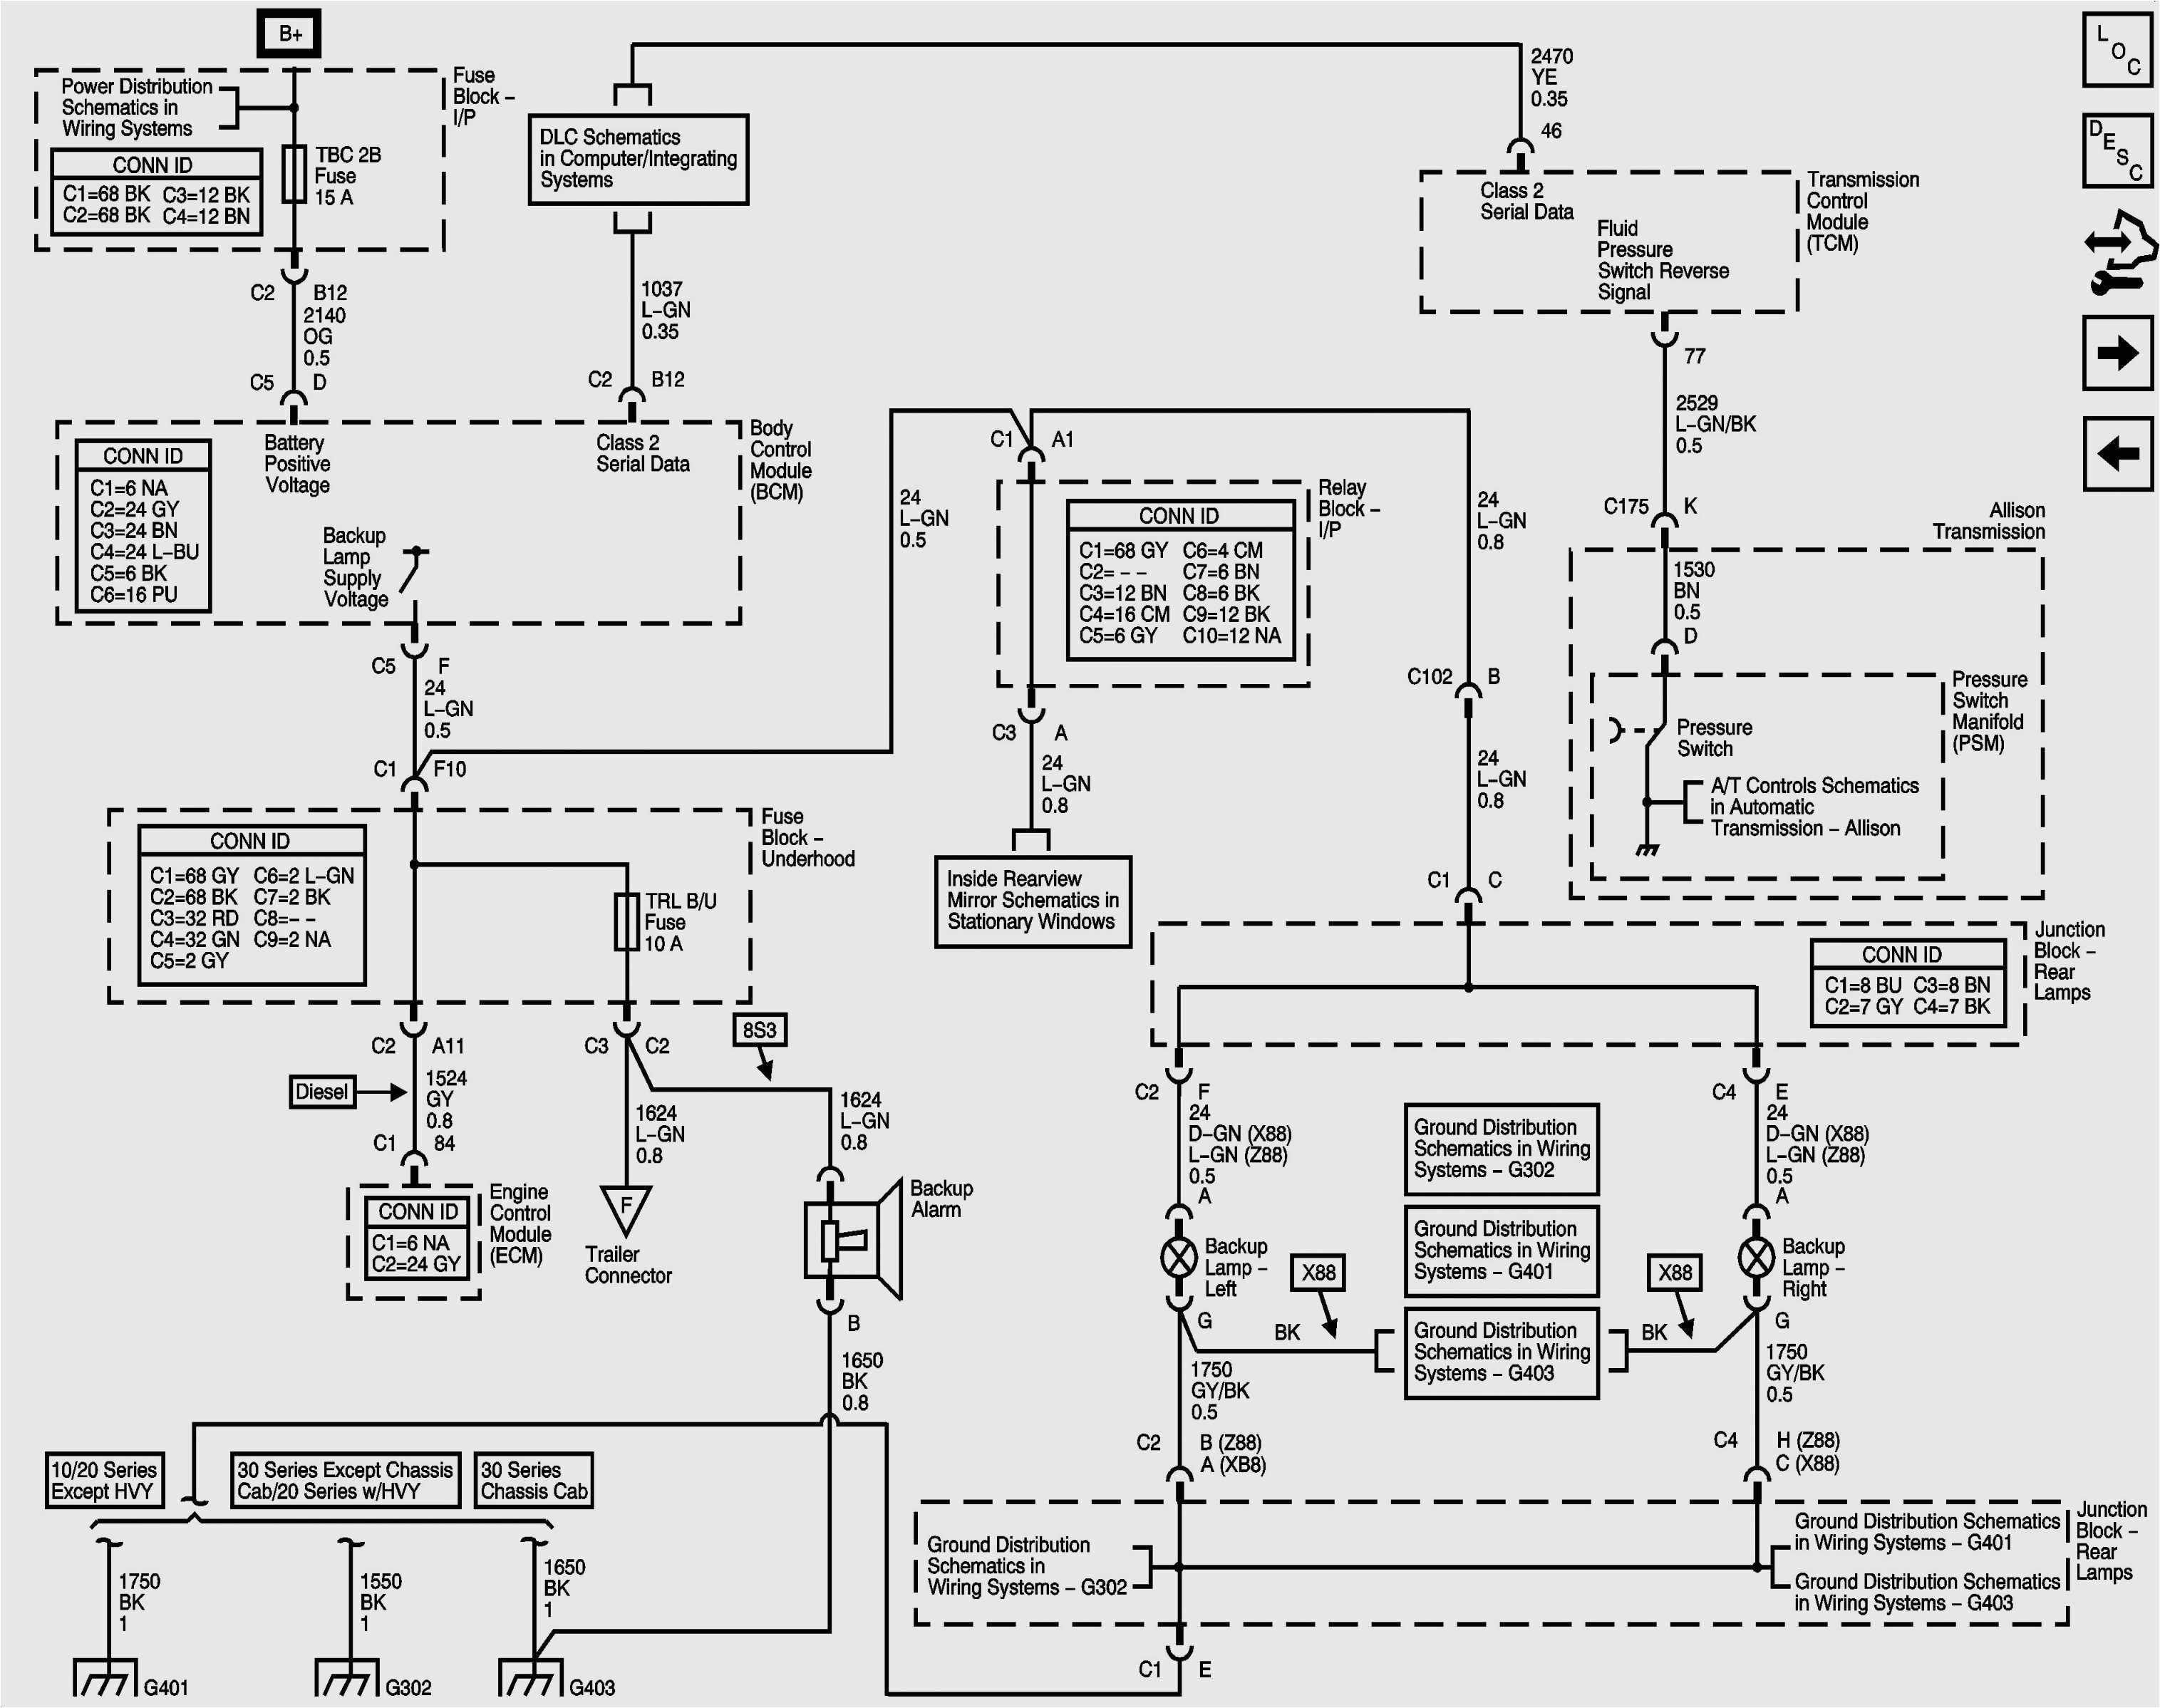 Intercom Wiring Diagram Intercom Wiring Diagram Wiring Diagrams